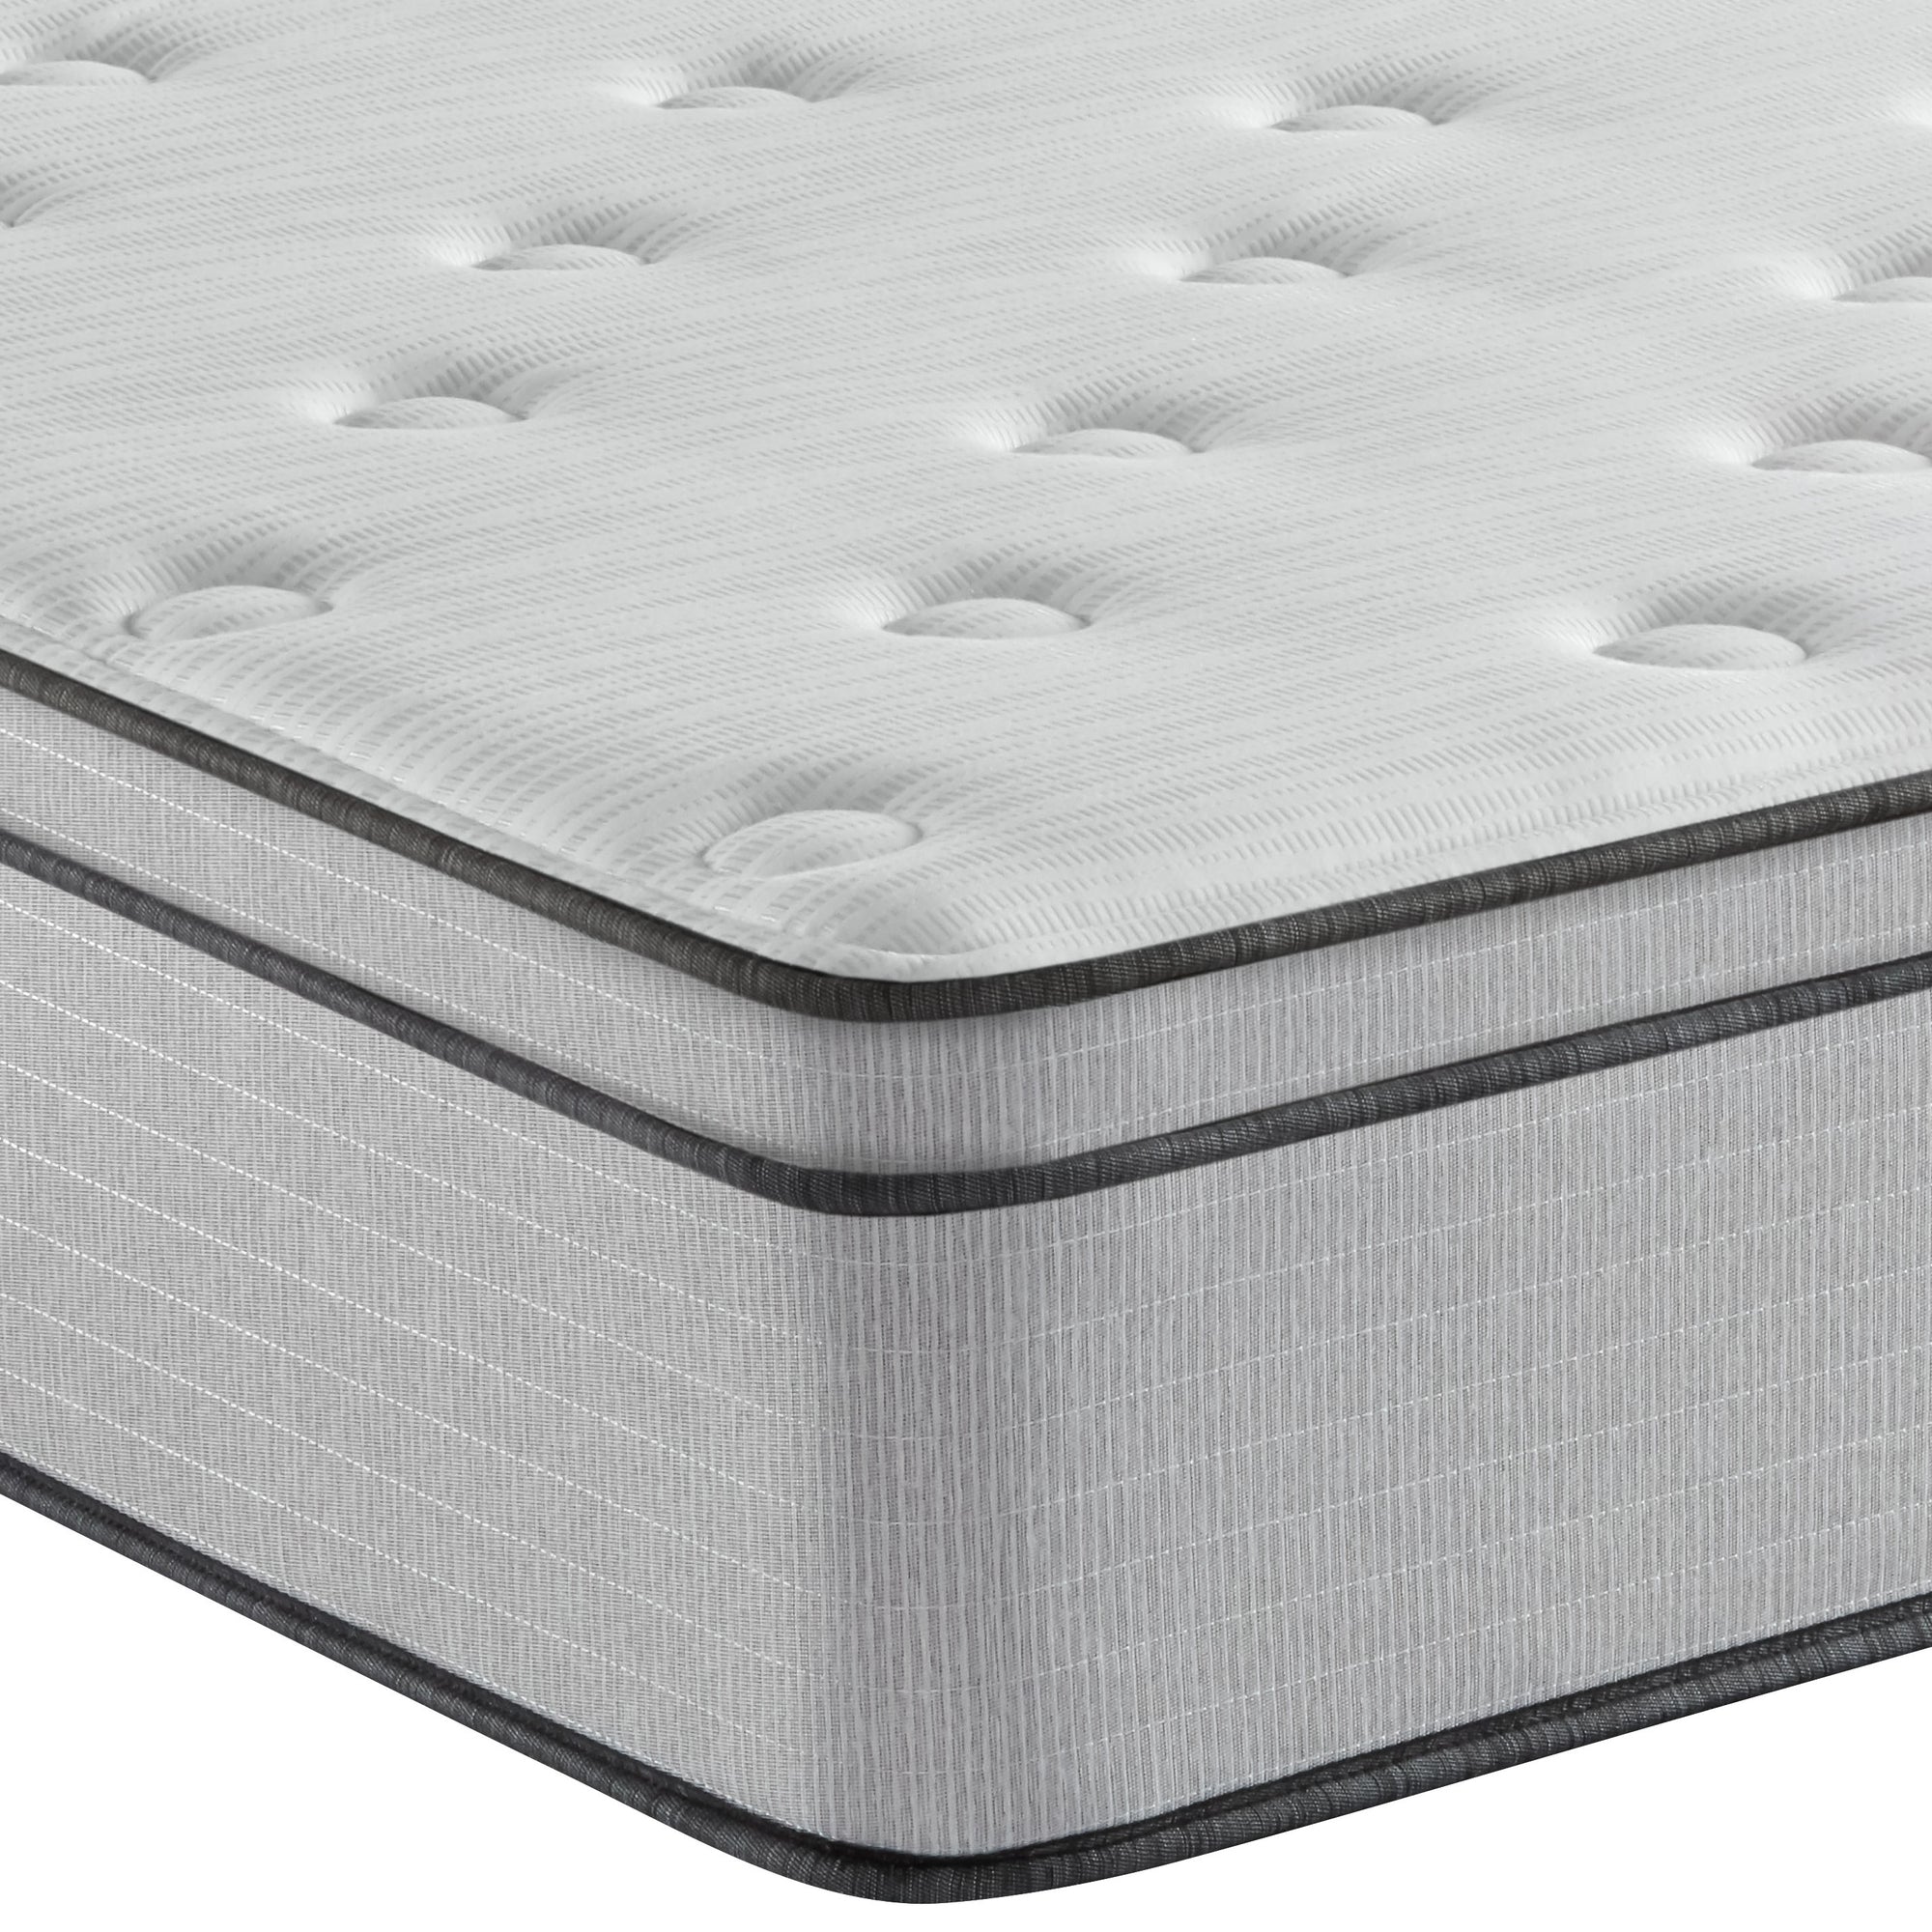 Corner view of the Beautyrest BR800 Plush Euro Top mattress